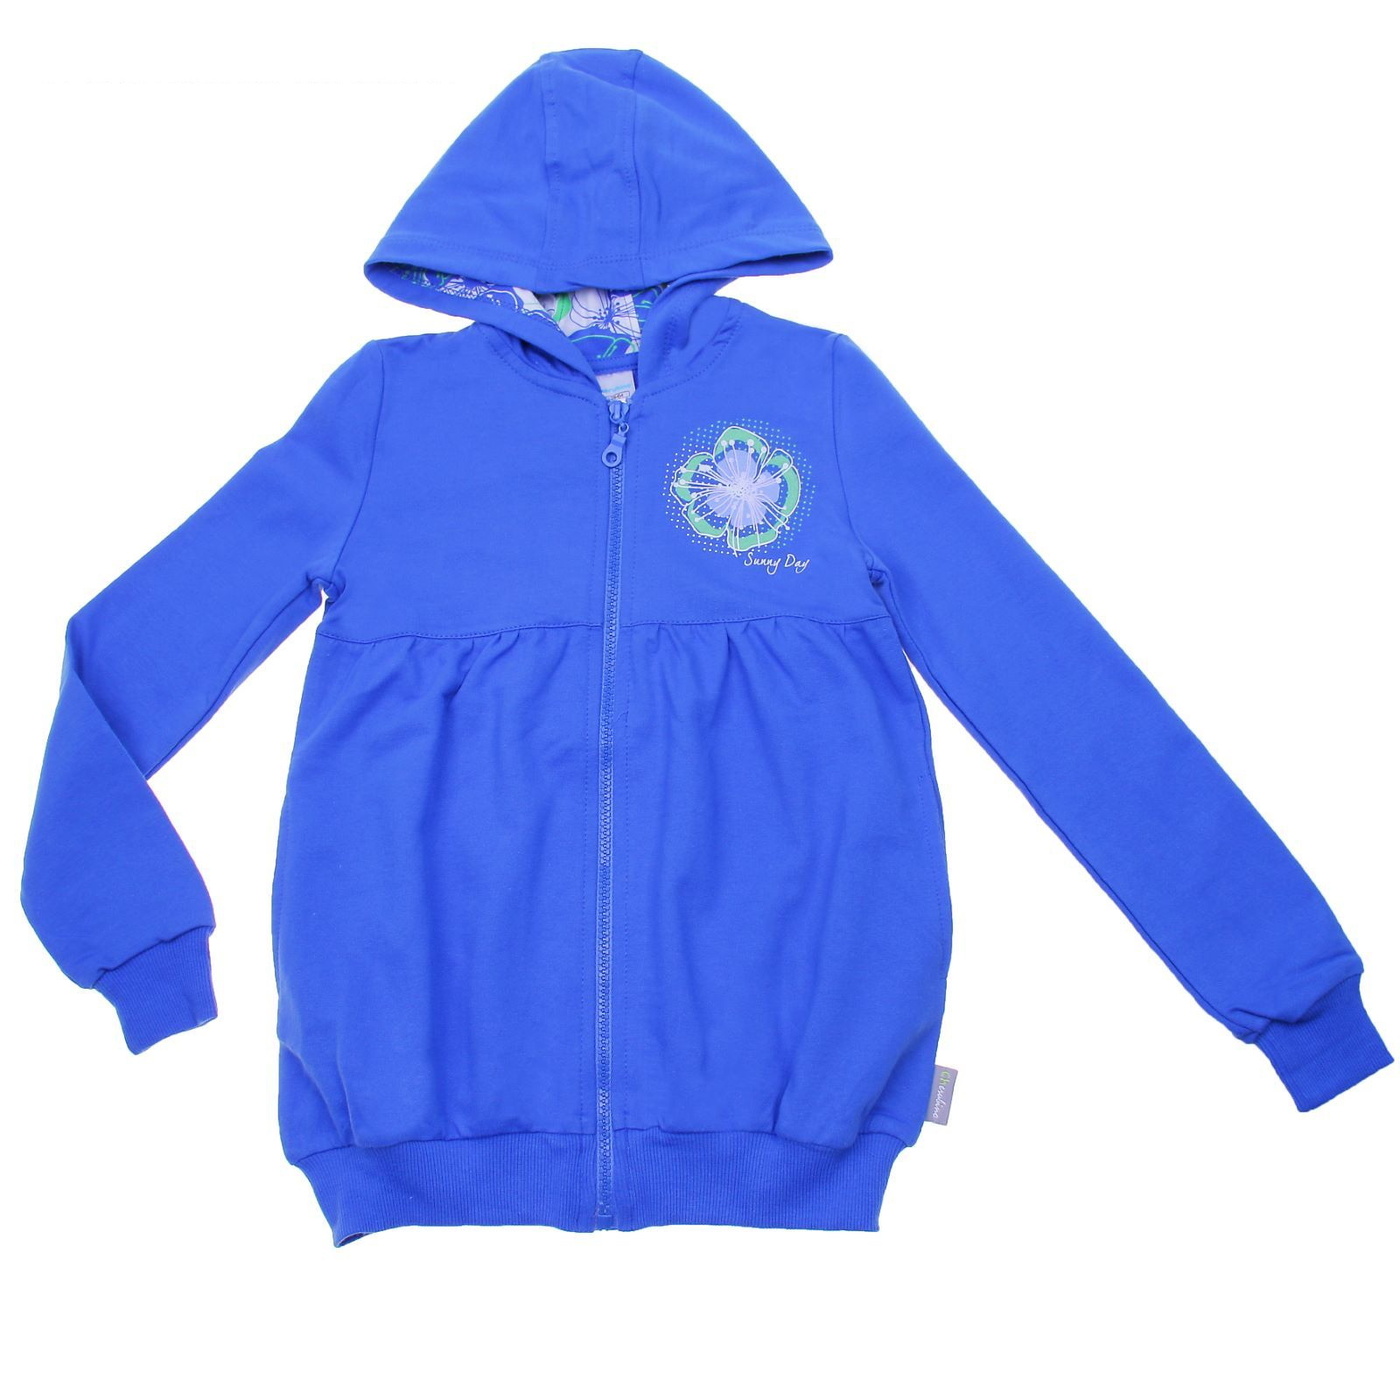 Куртка детская Cherubino 6515 (08) CAJ, синий, 128 куртка детская cherubino 6515 08 caj синий 128